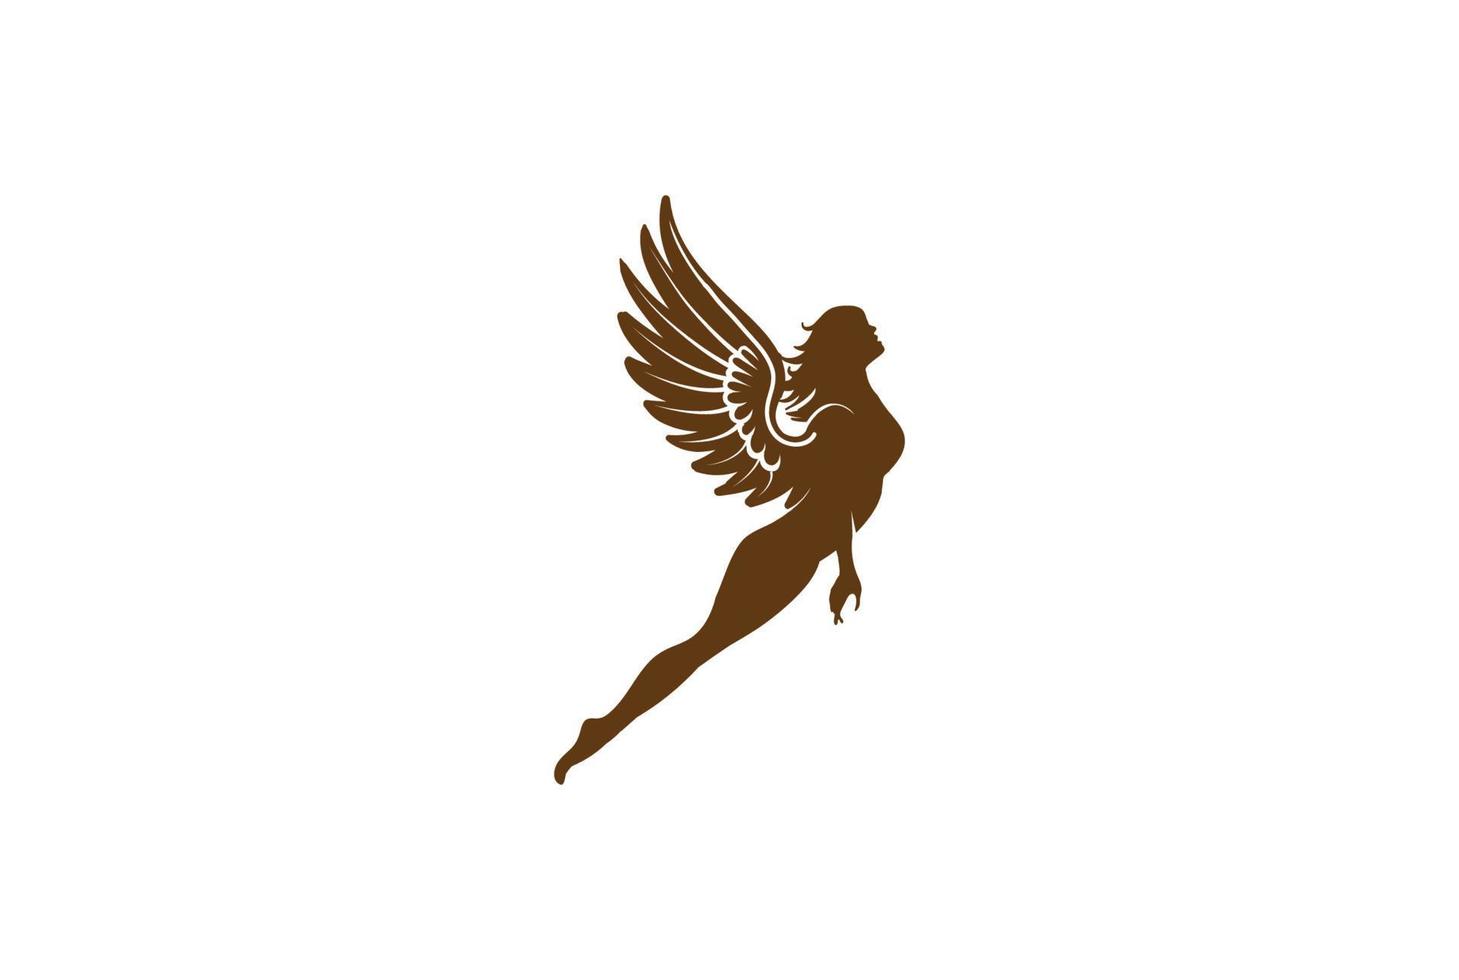 quente sexy anjo voador mulher menina senhora feminina logo design vector